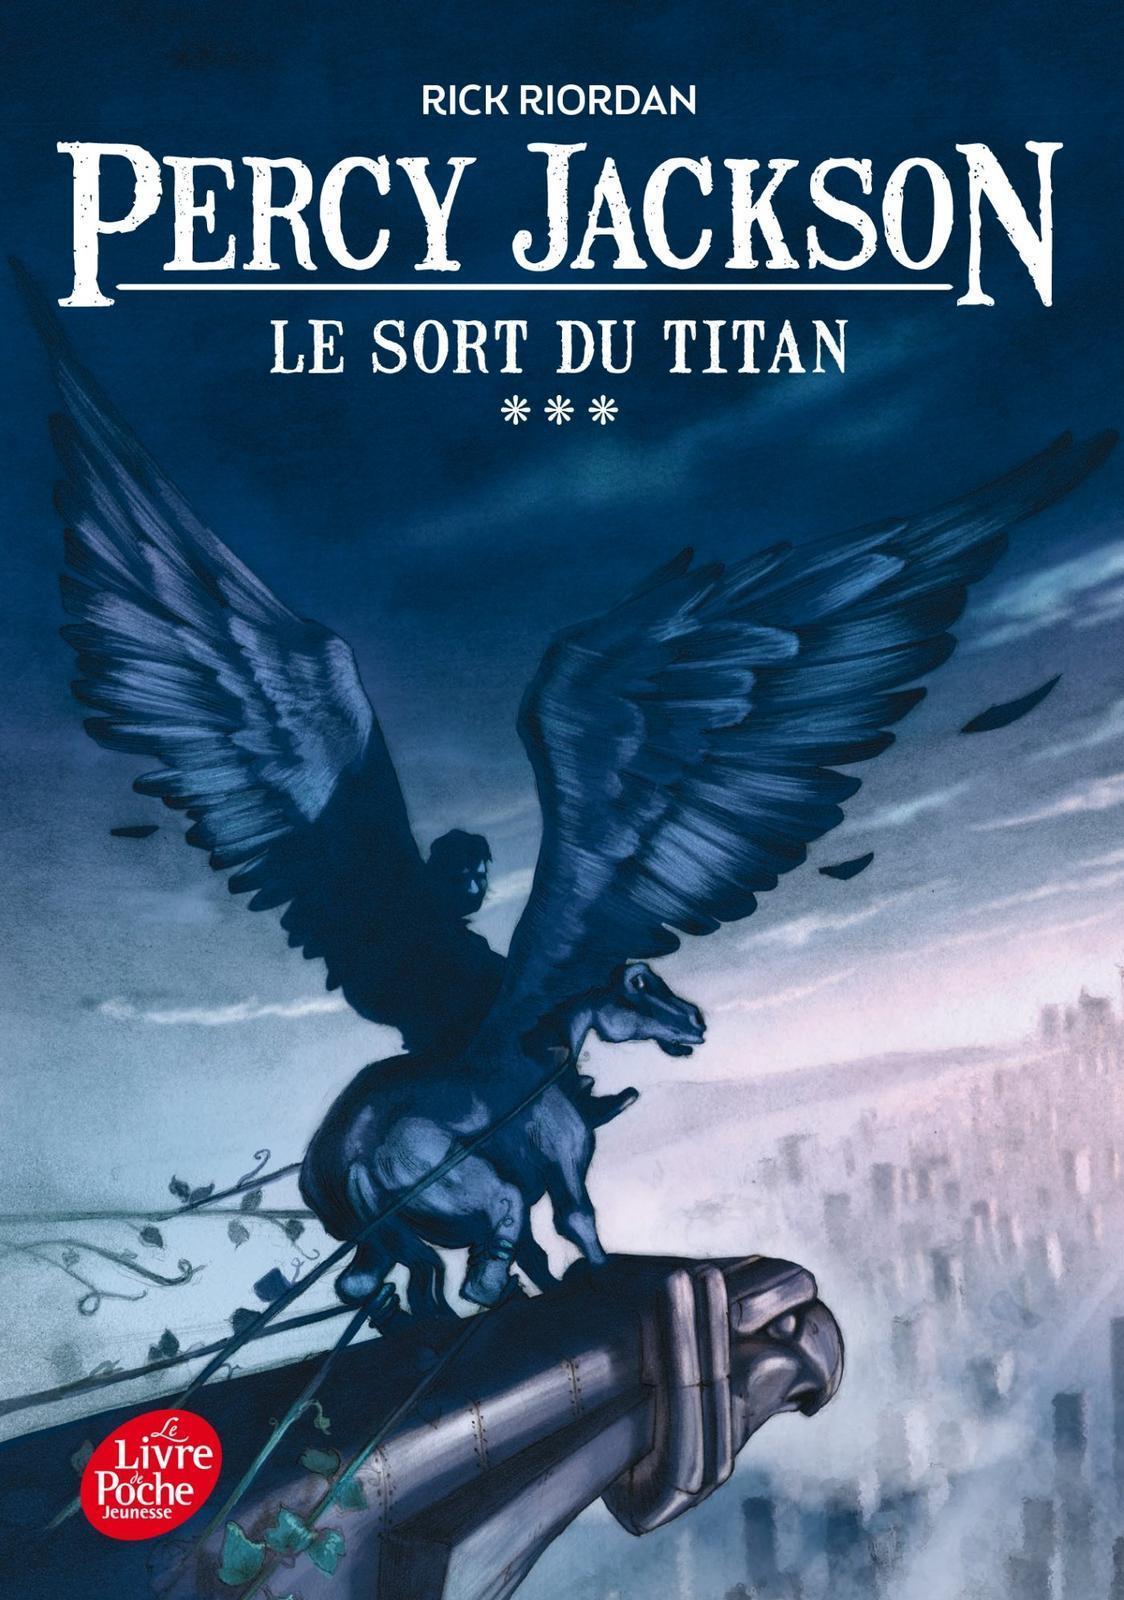 Percy Jackson - Le sort du titan (French language, 2010)